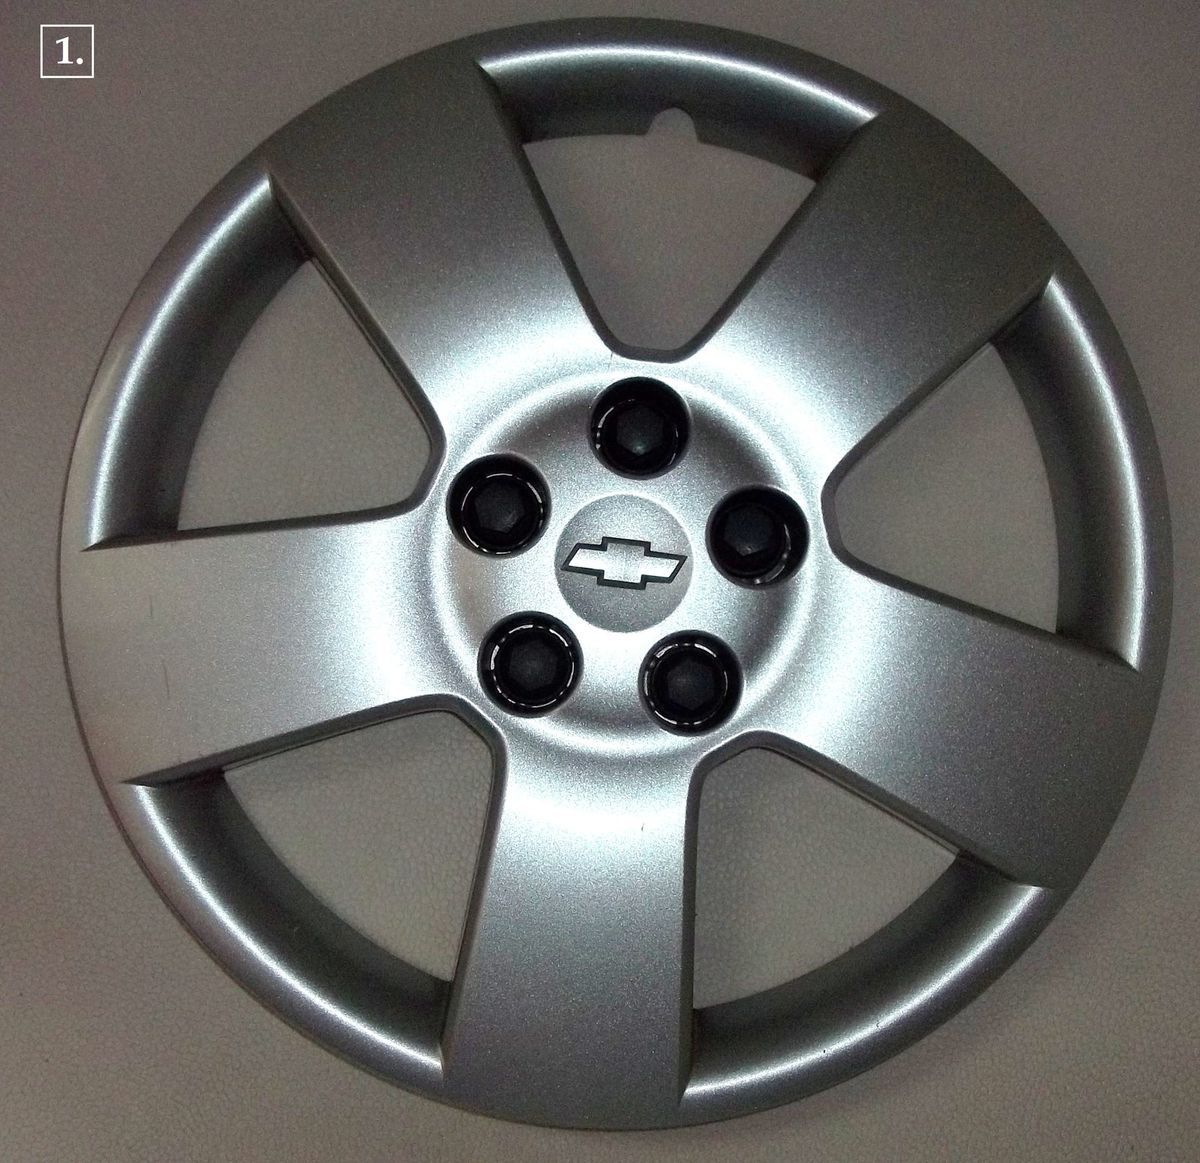 Chevrolet Wheel Cover Hub Cap for Malibu Impala SSR